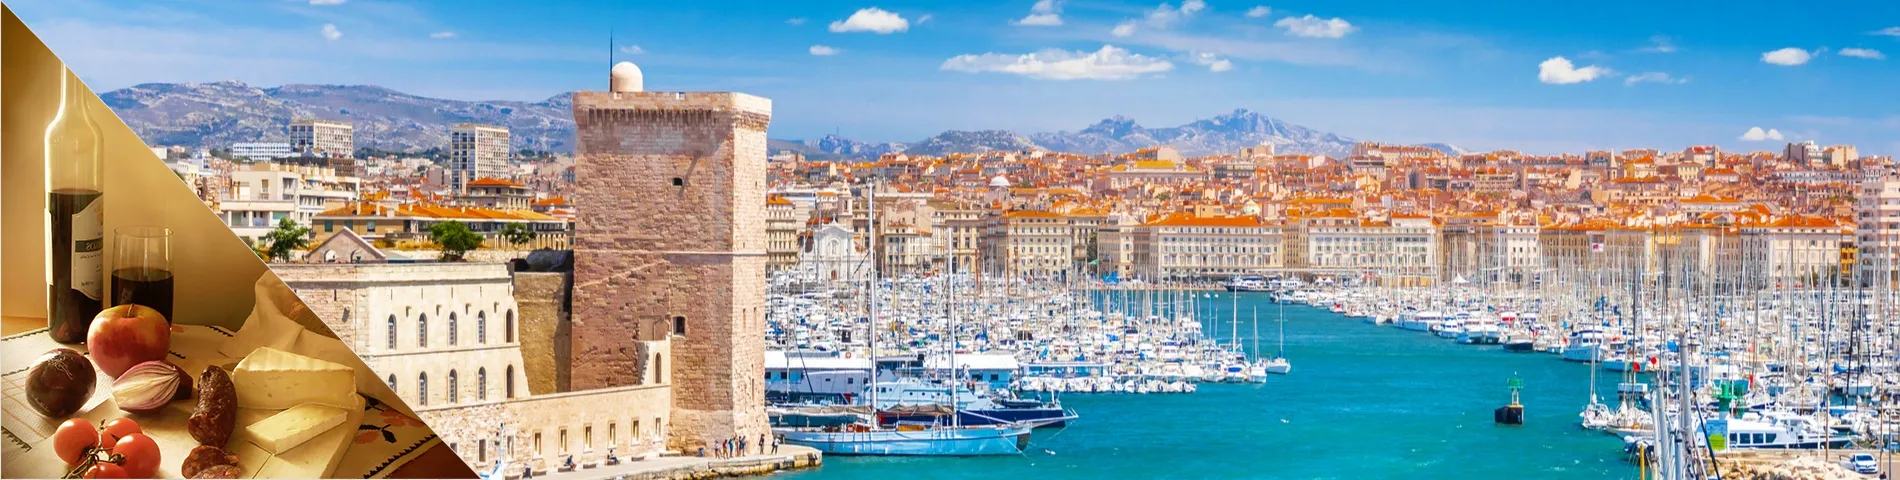 Marseille - Ranska & kulttuuri